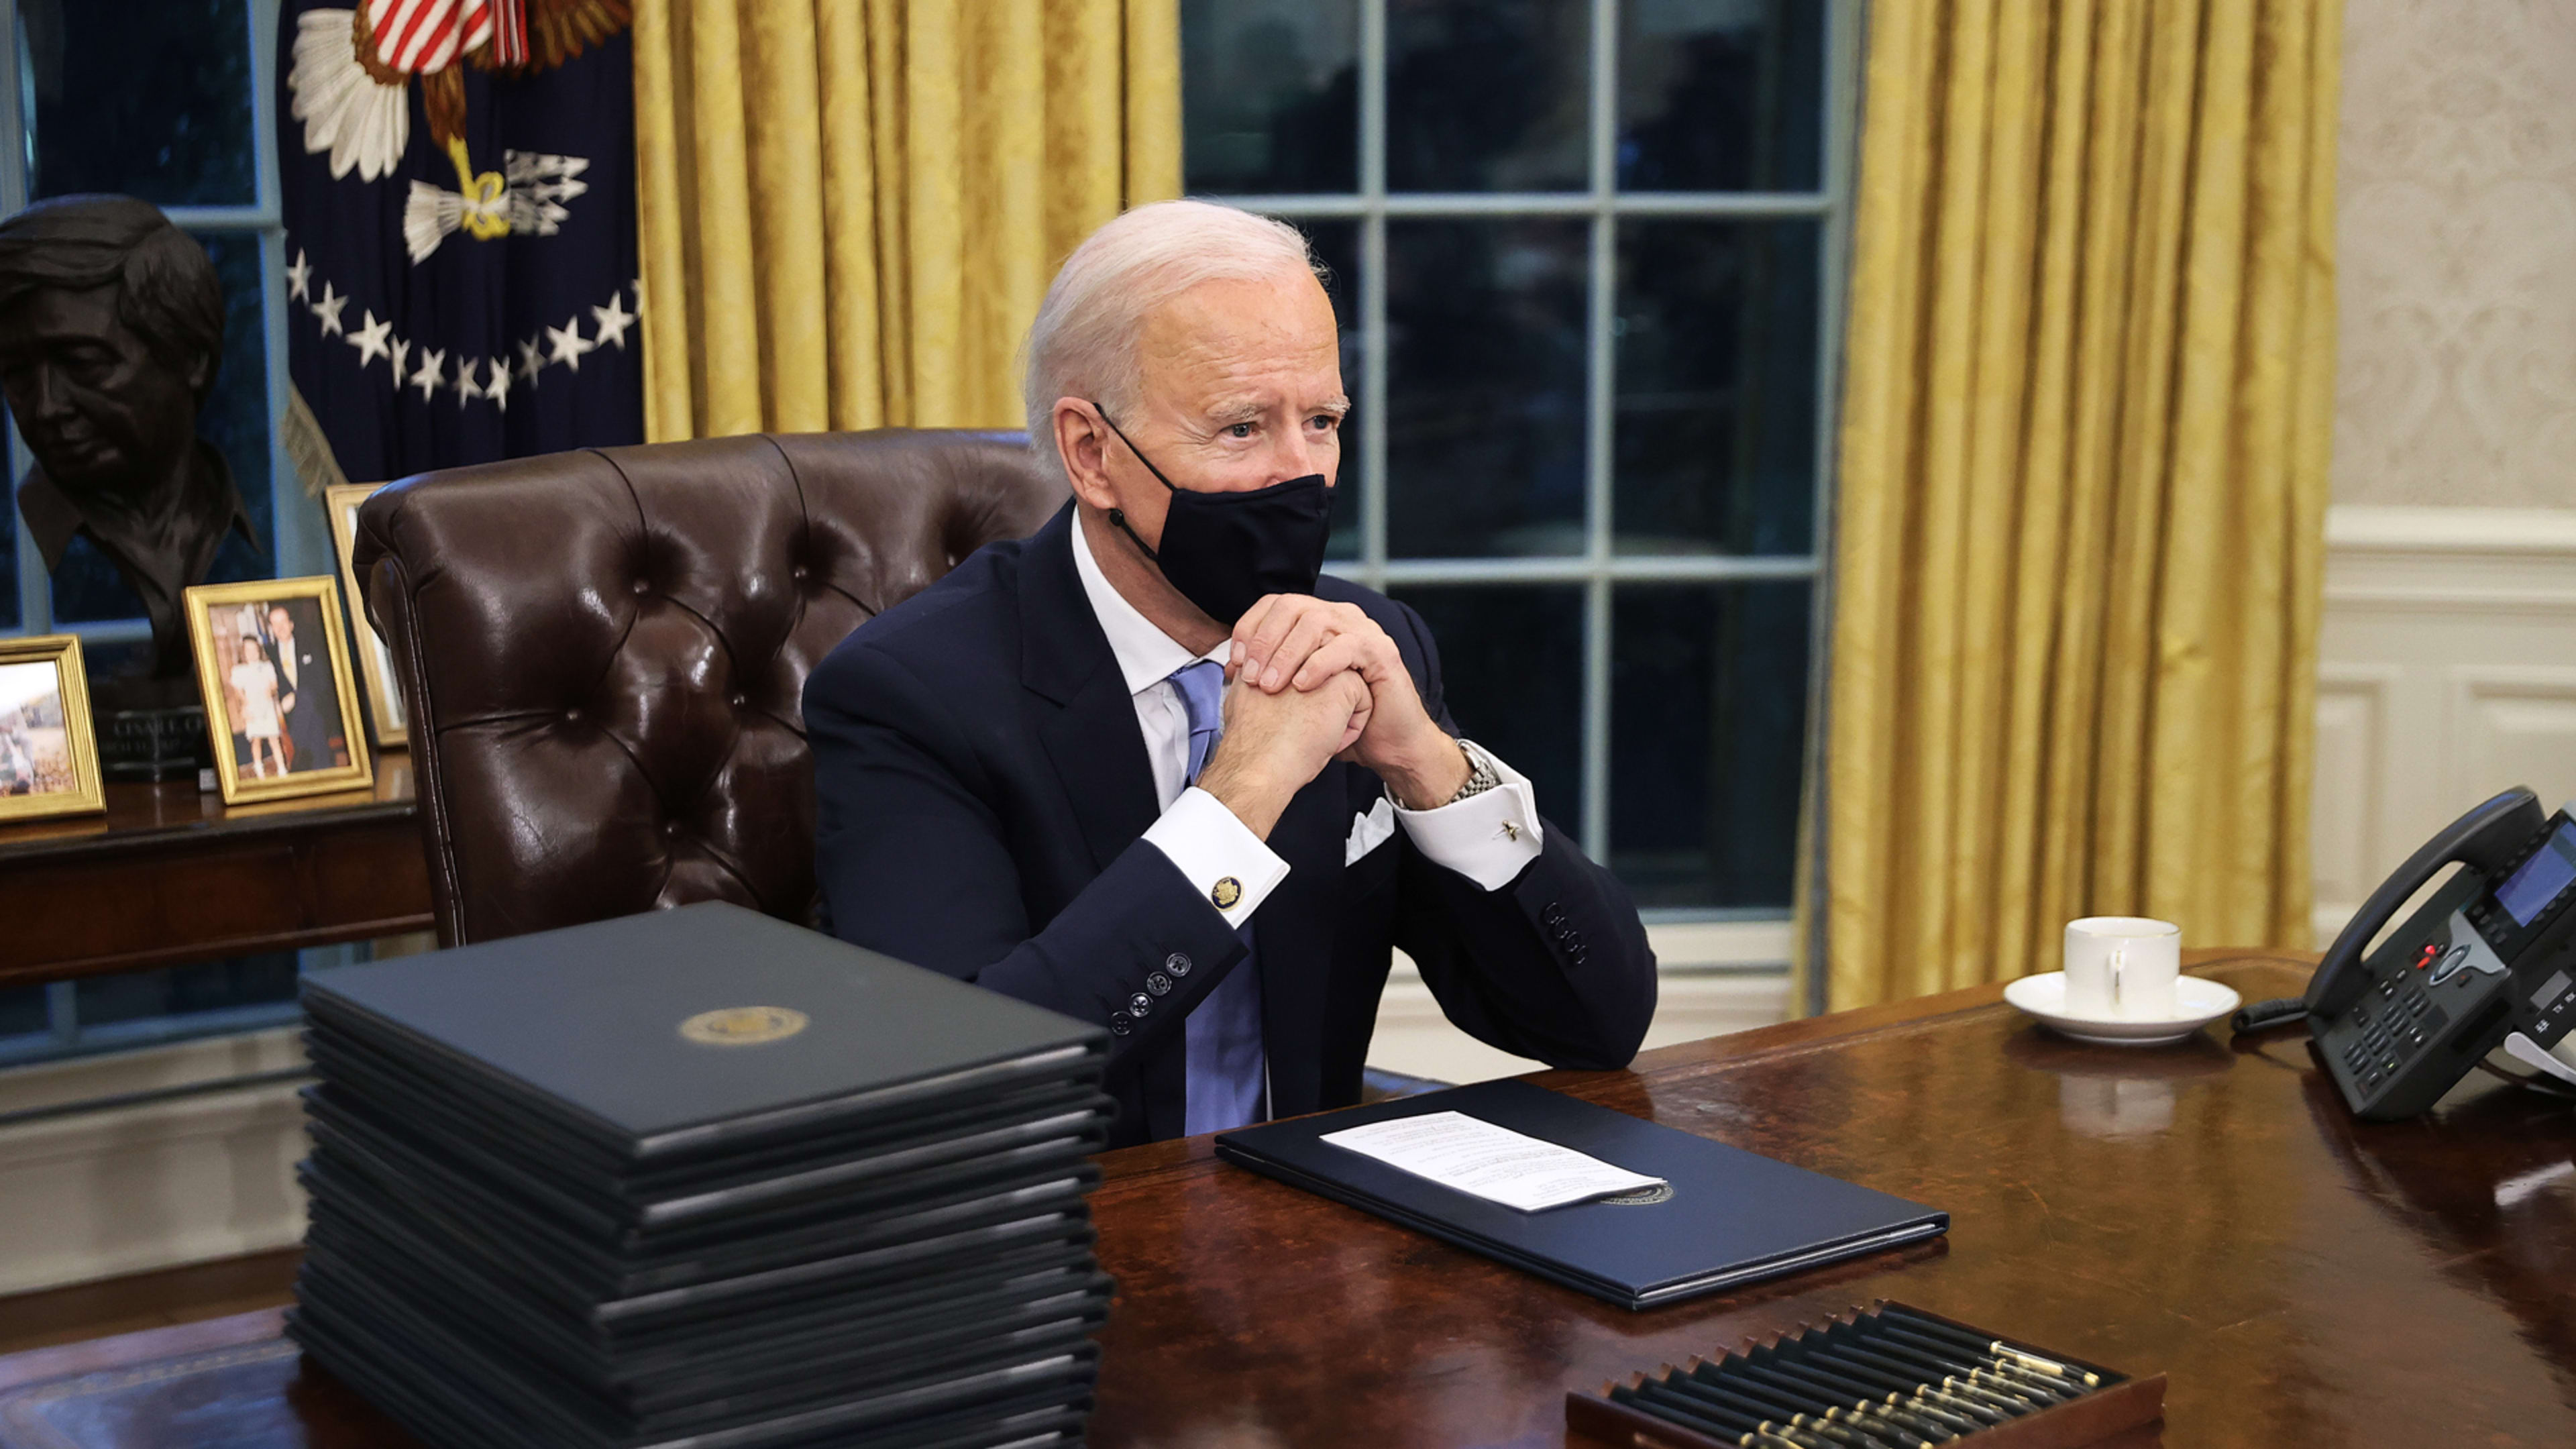 Biden has inherited the worst health crisis in memory. Can he turn it around?